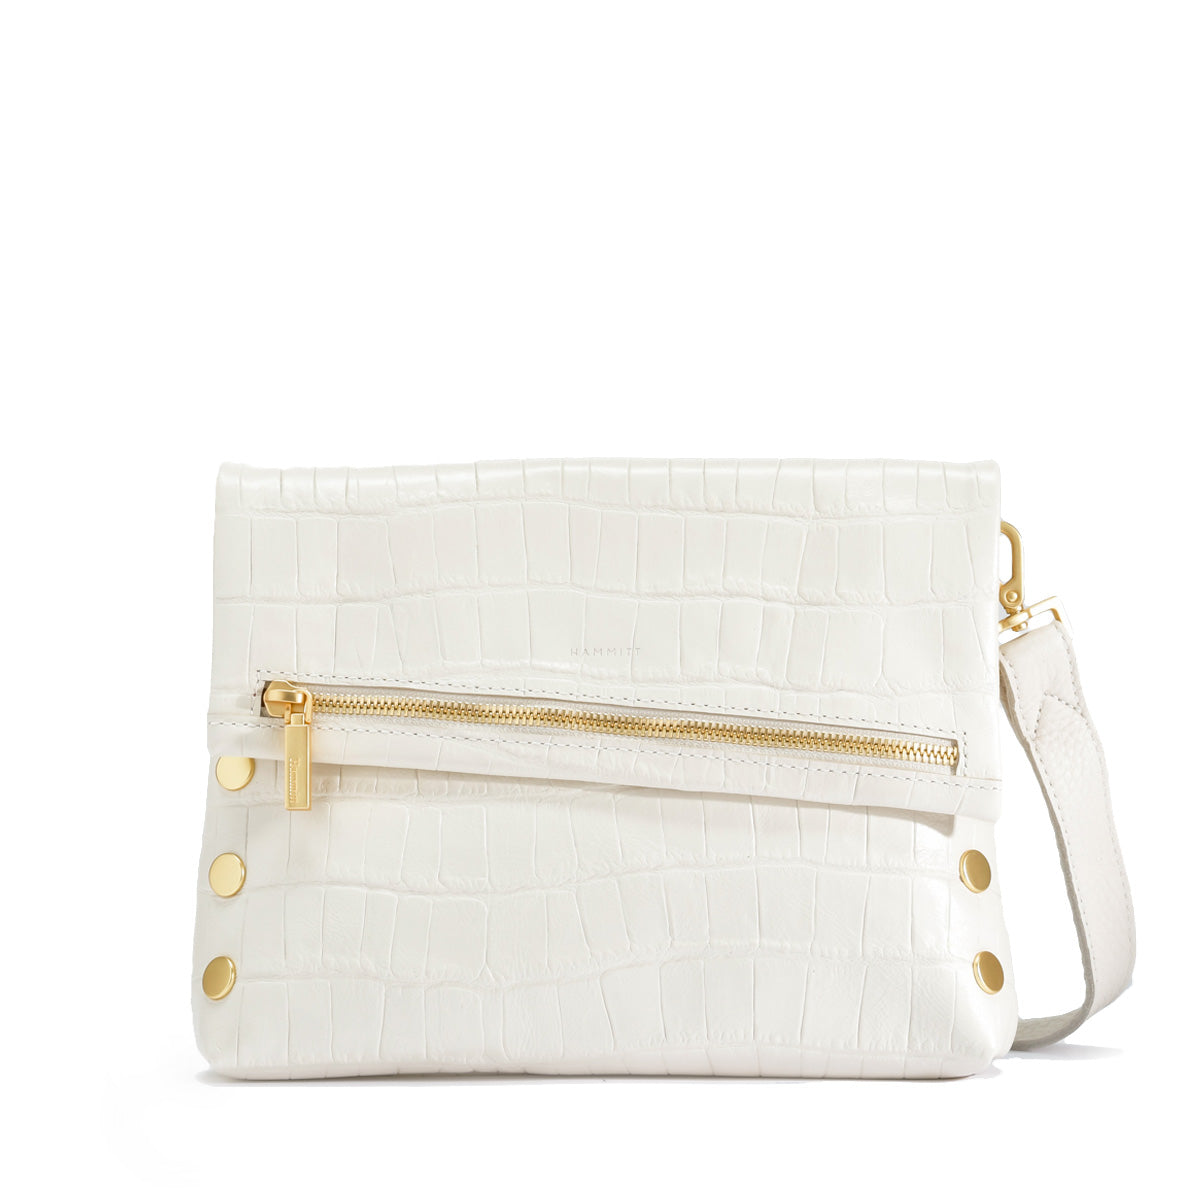 Hammitt Leather Handbag Vip Medium Calla Lily Crocco White Bag